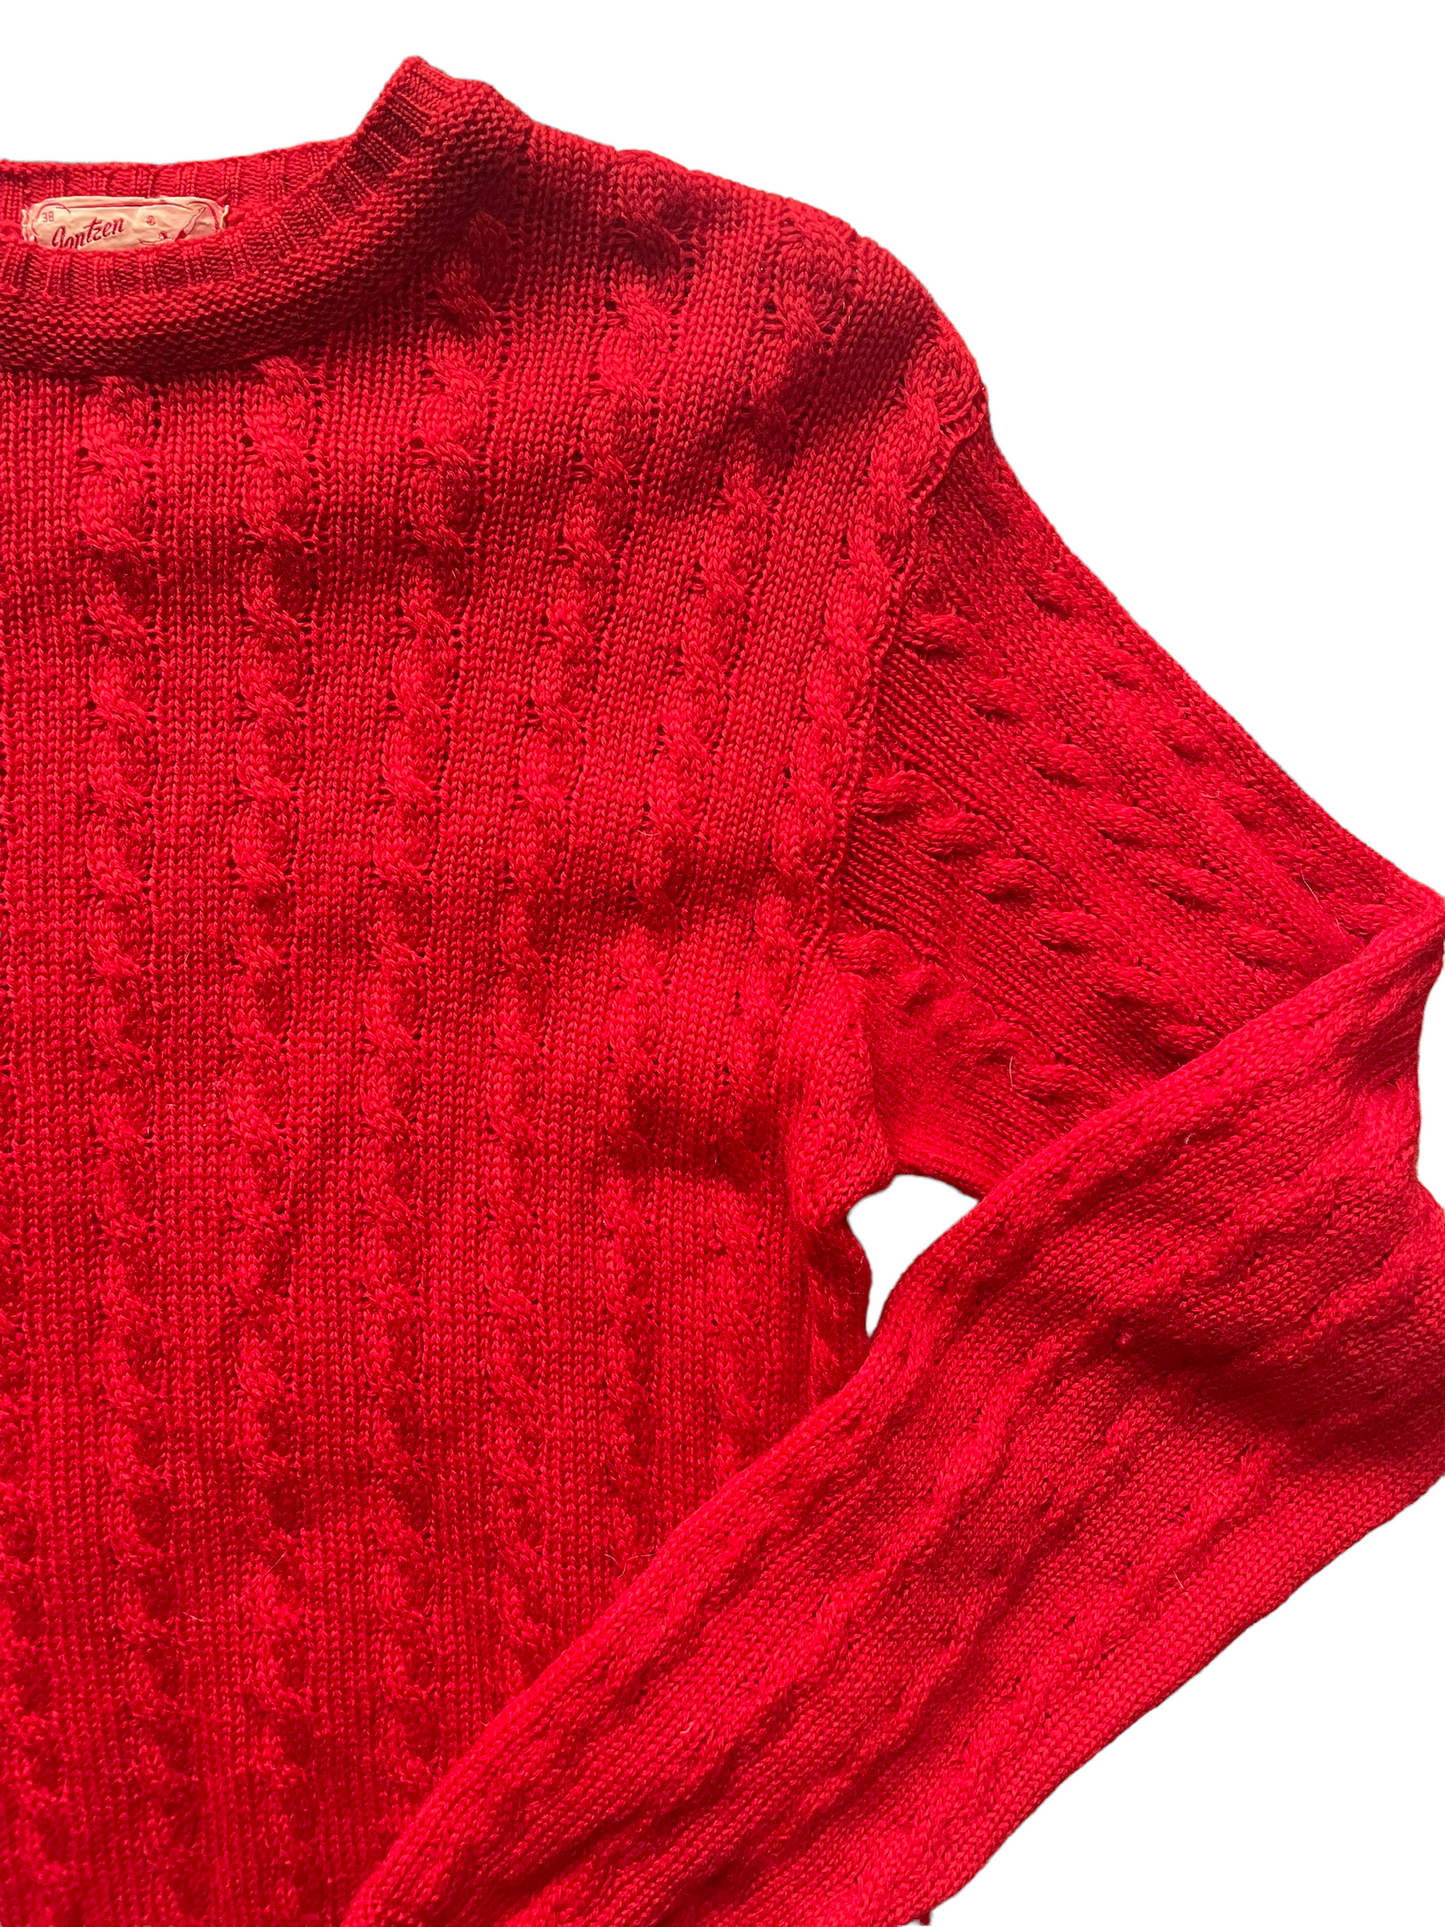 Vintage 1950s Jantzen Cable Knit Wool Sweater | Barn Owl Seattle | Seattle Vintage Sweaters Front left shoulder view.